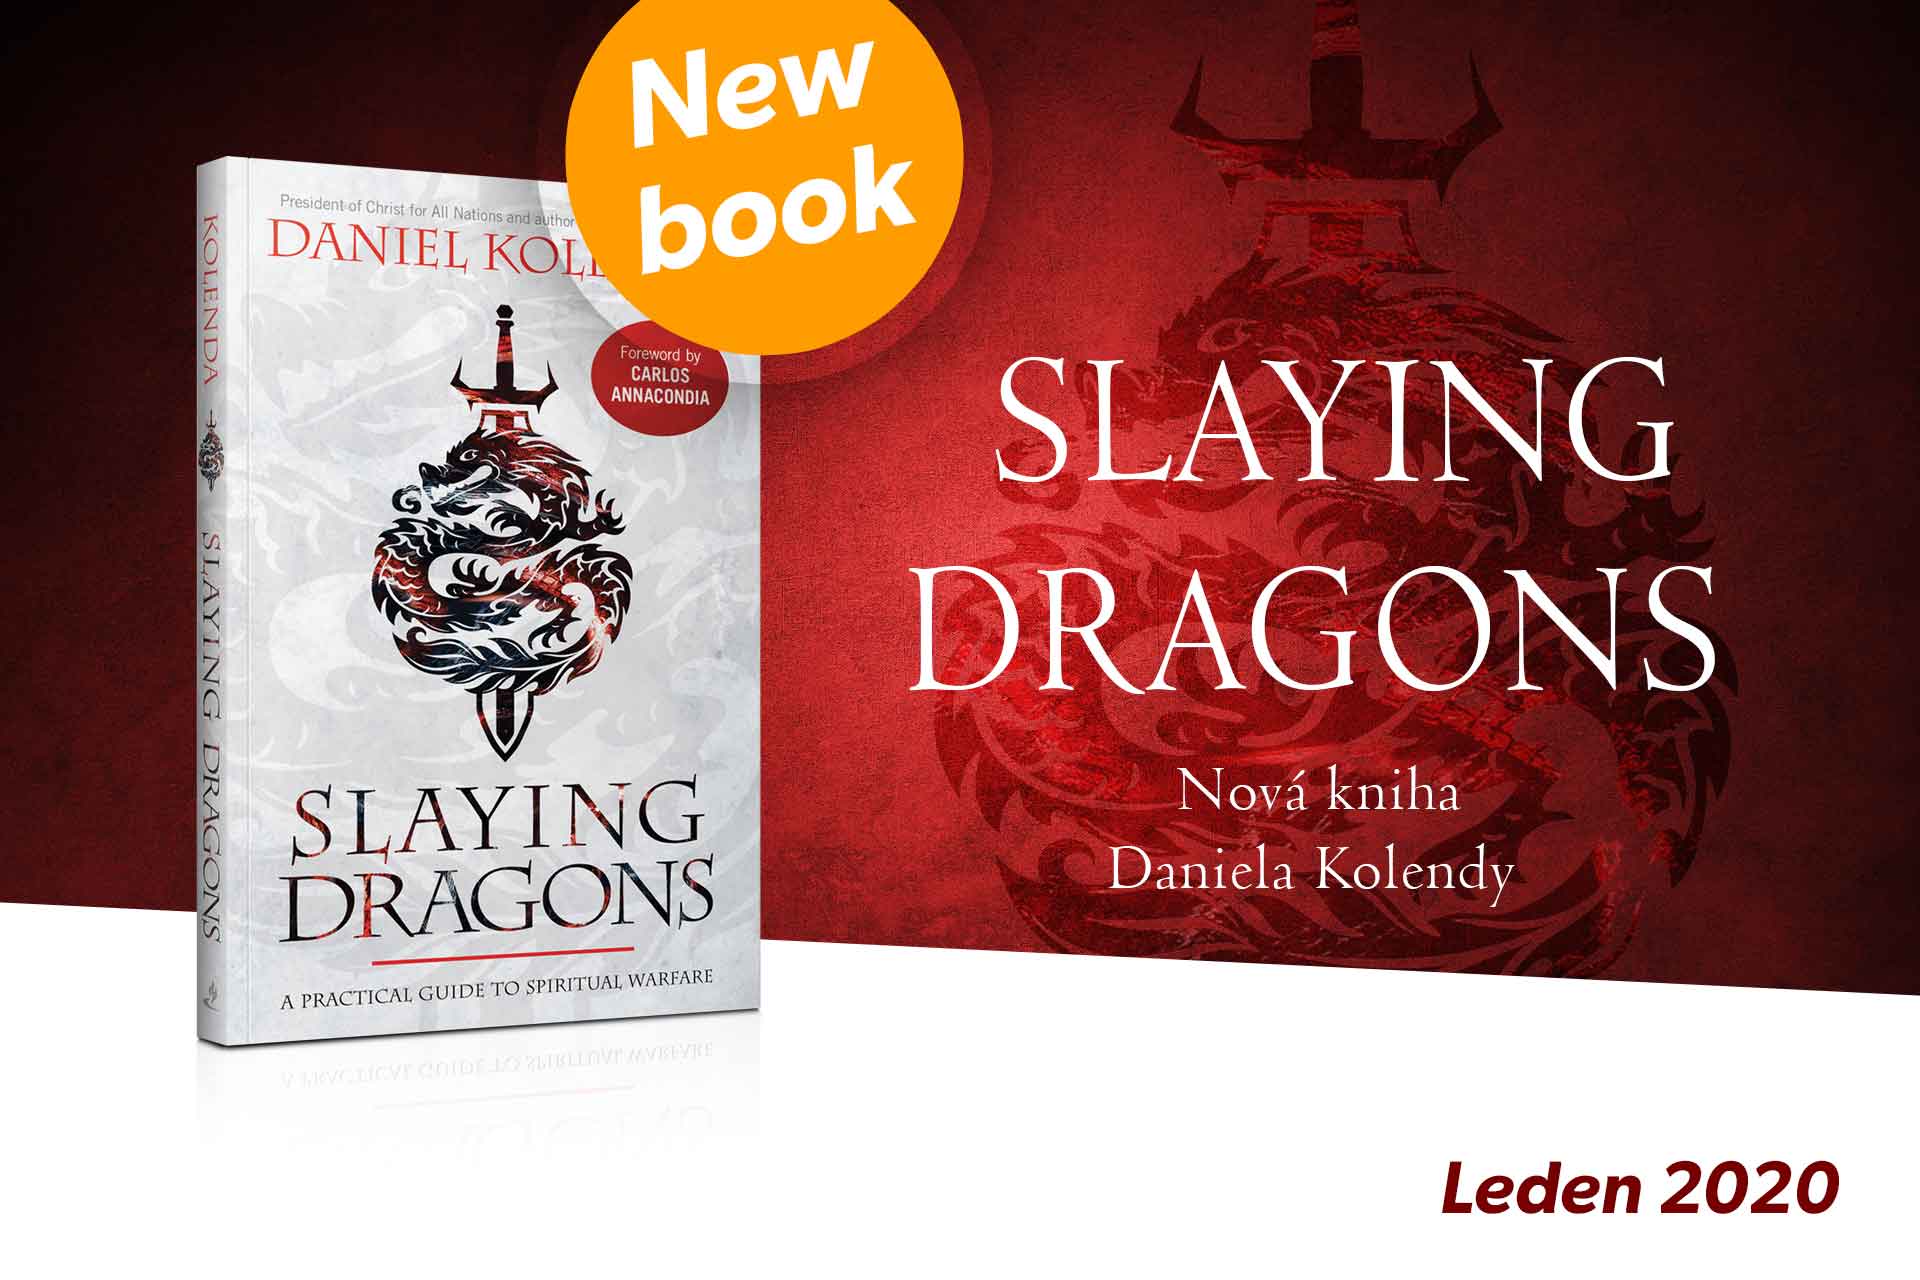 New book by Daniel Kolenda - Slaying Dragons